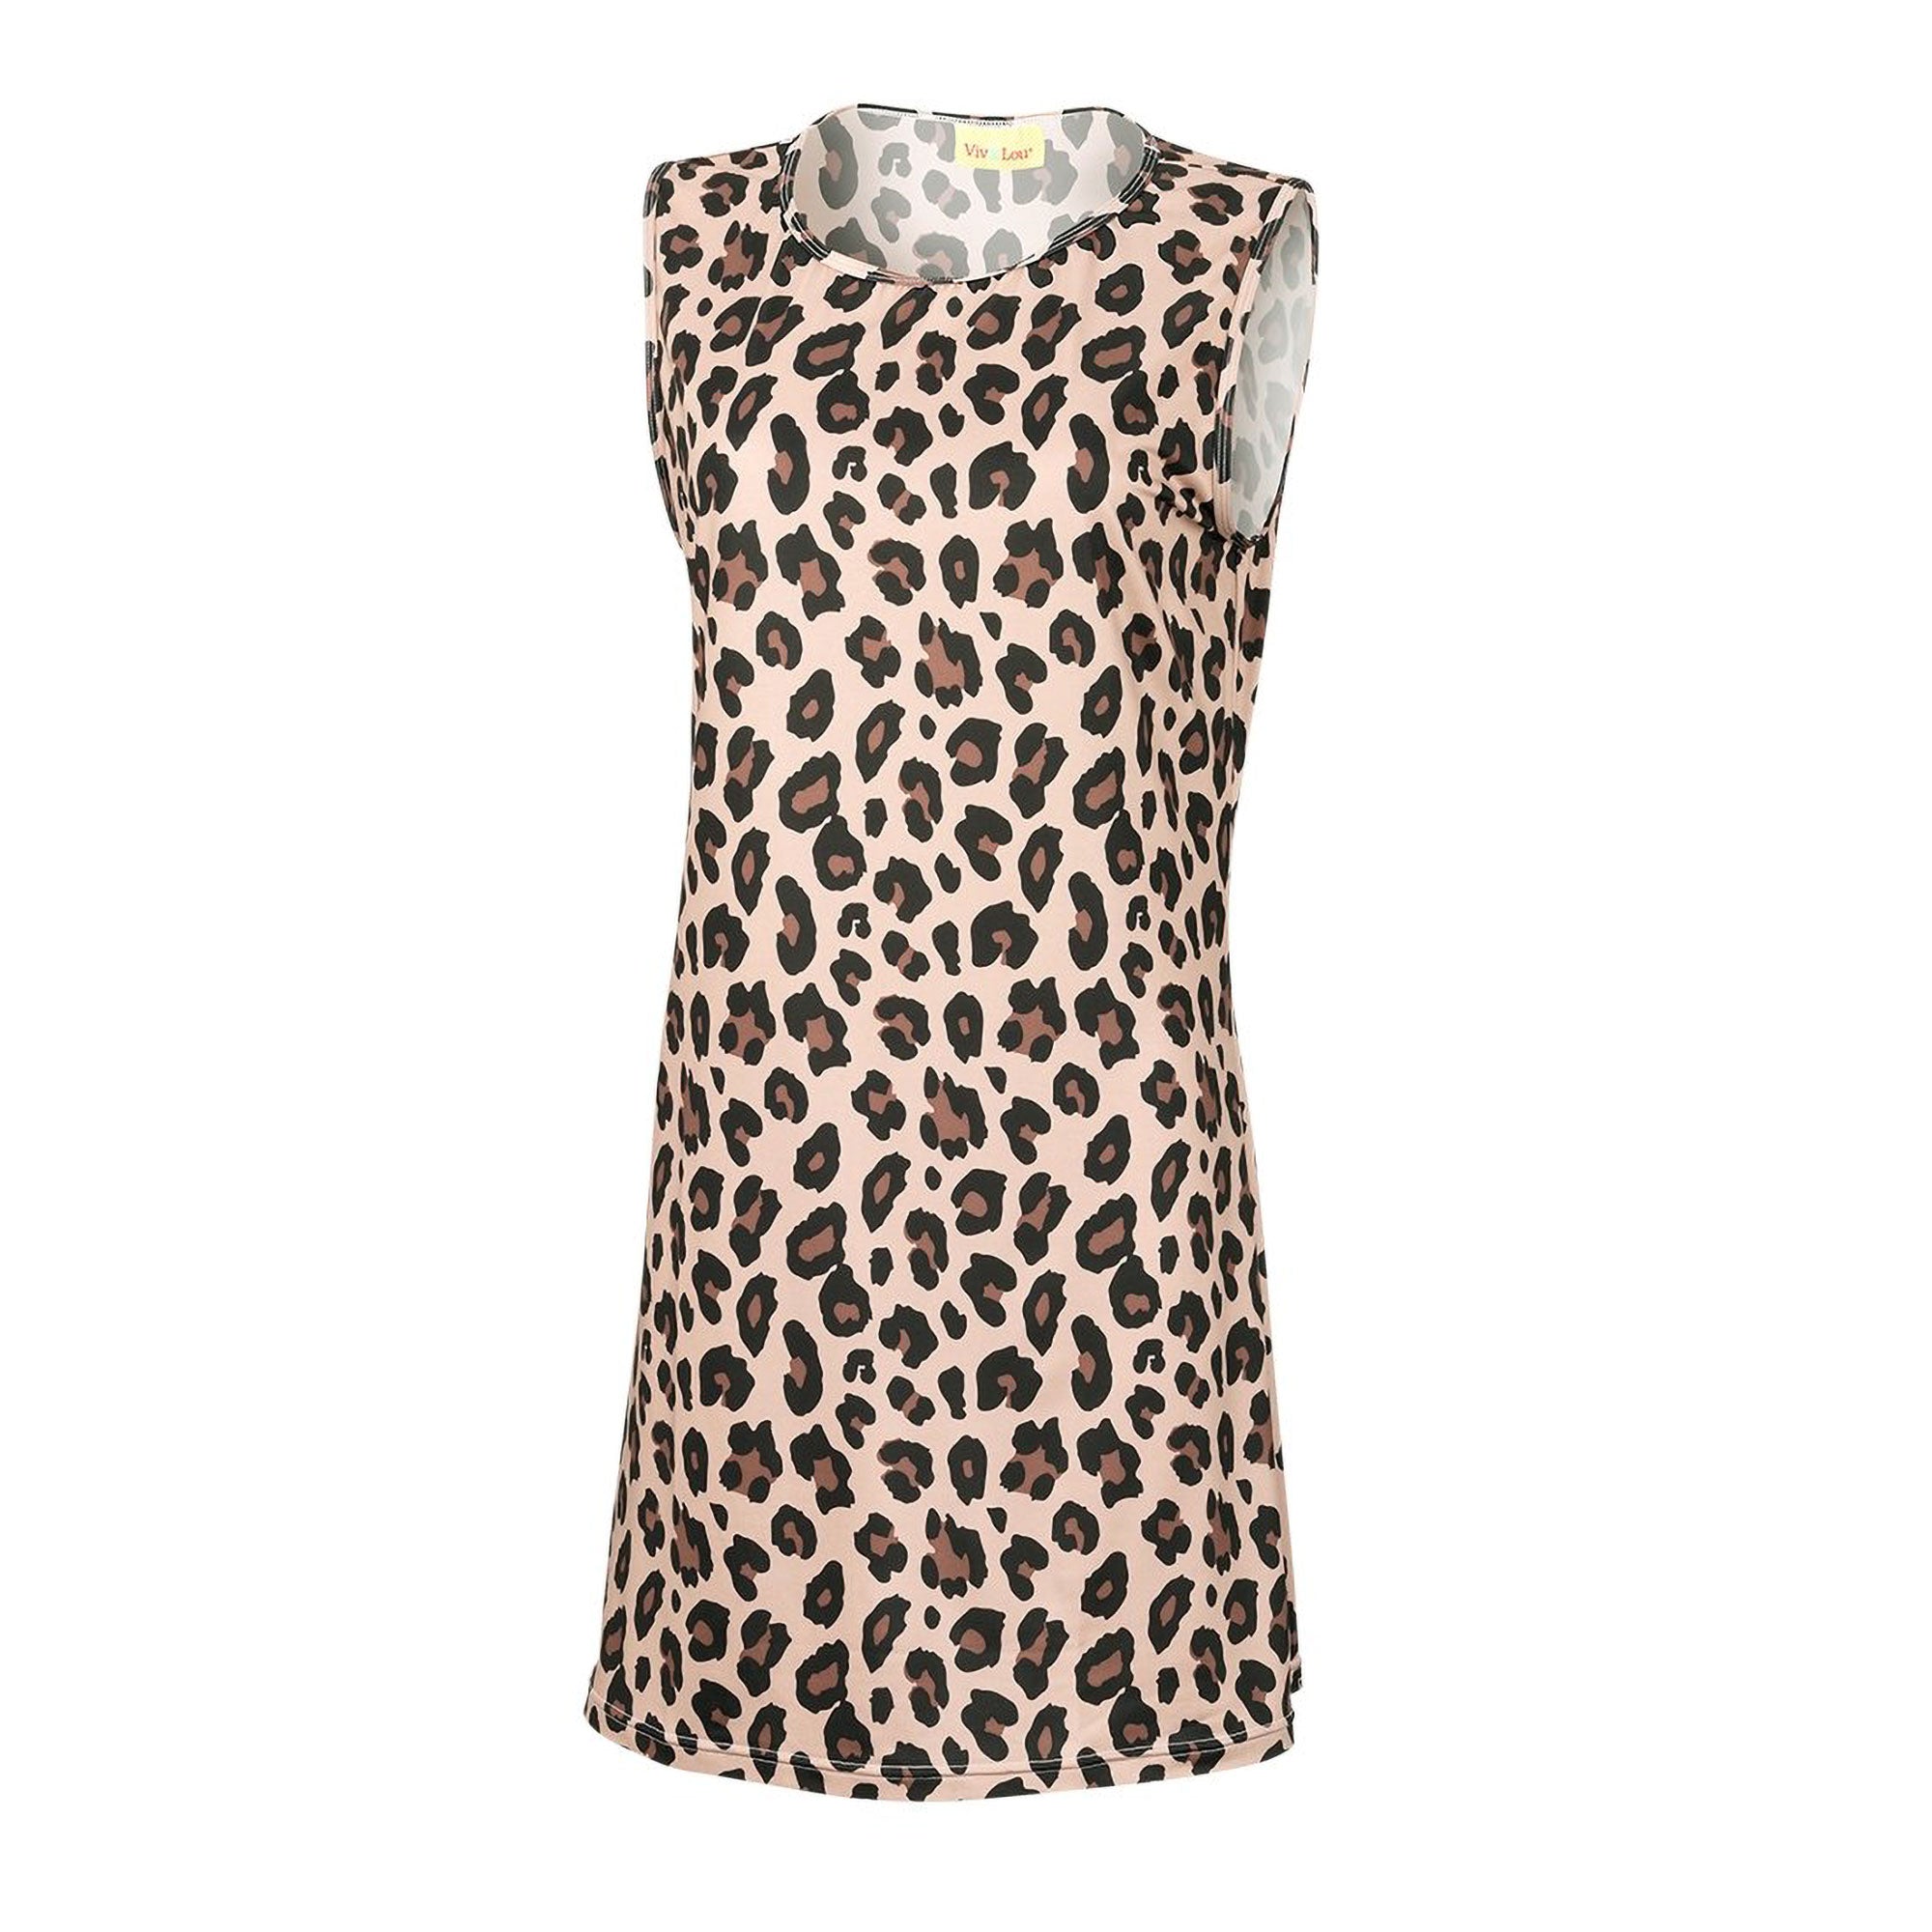 VIV&LOU Wild Side Leopard Dress - S/M